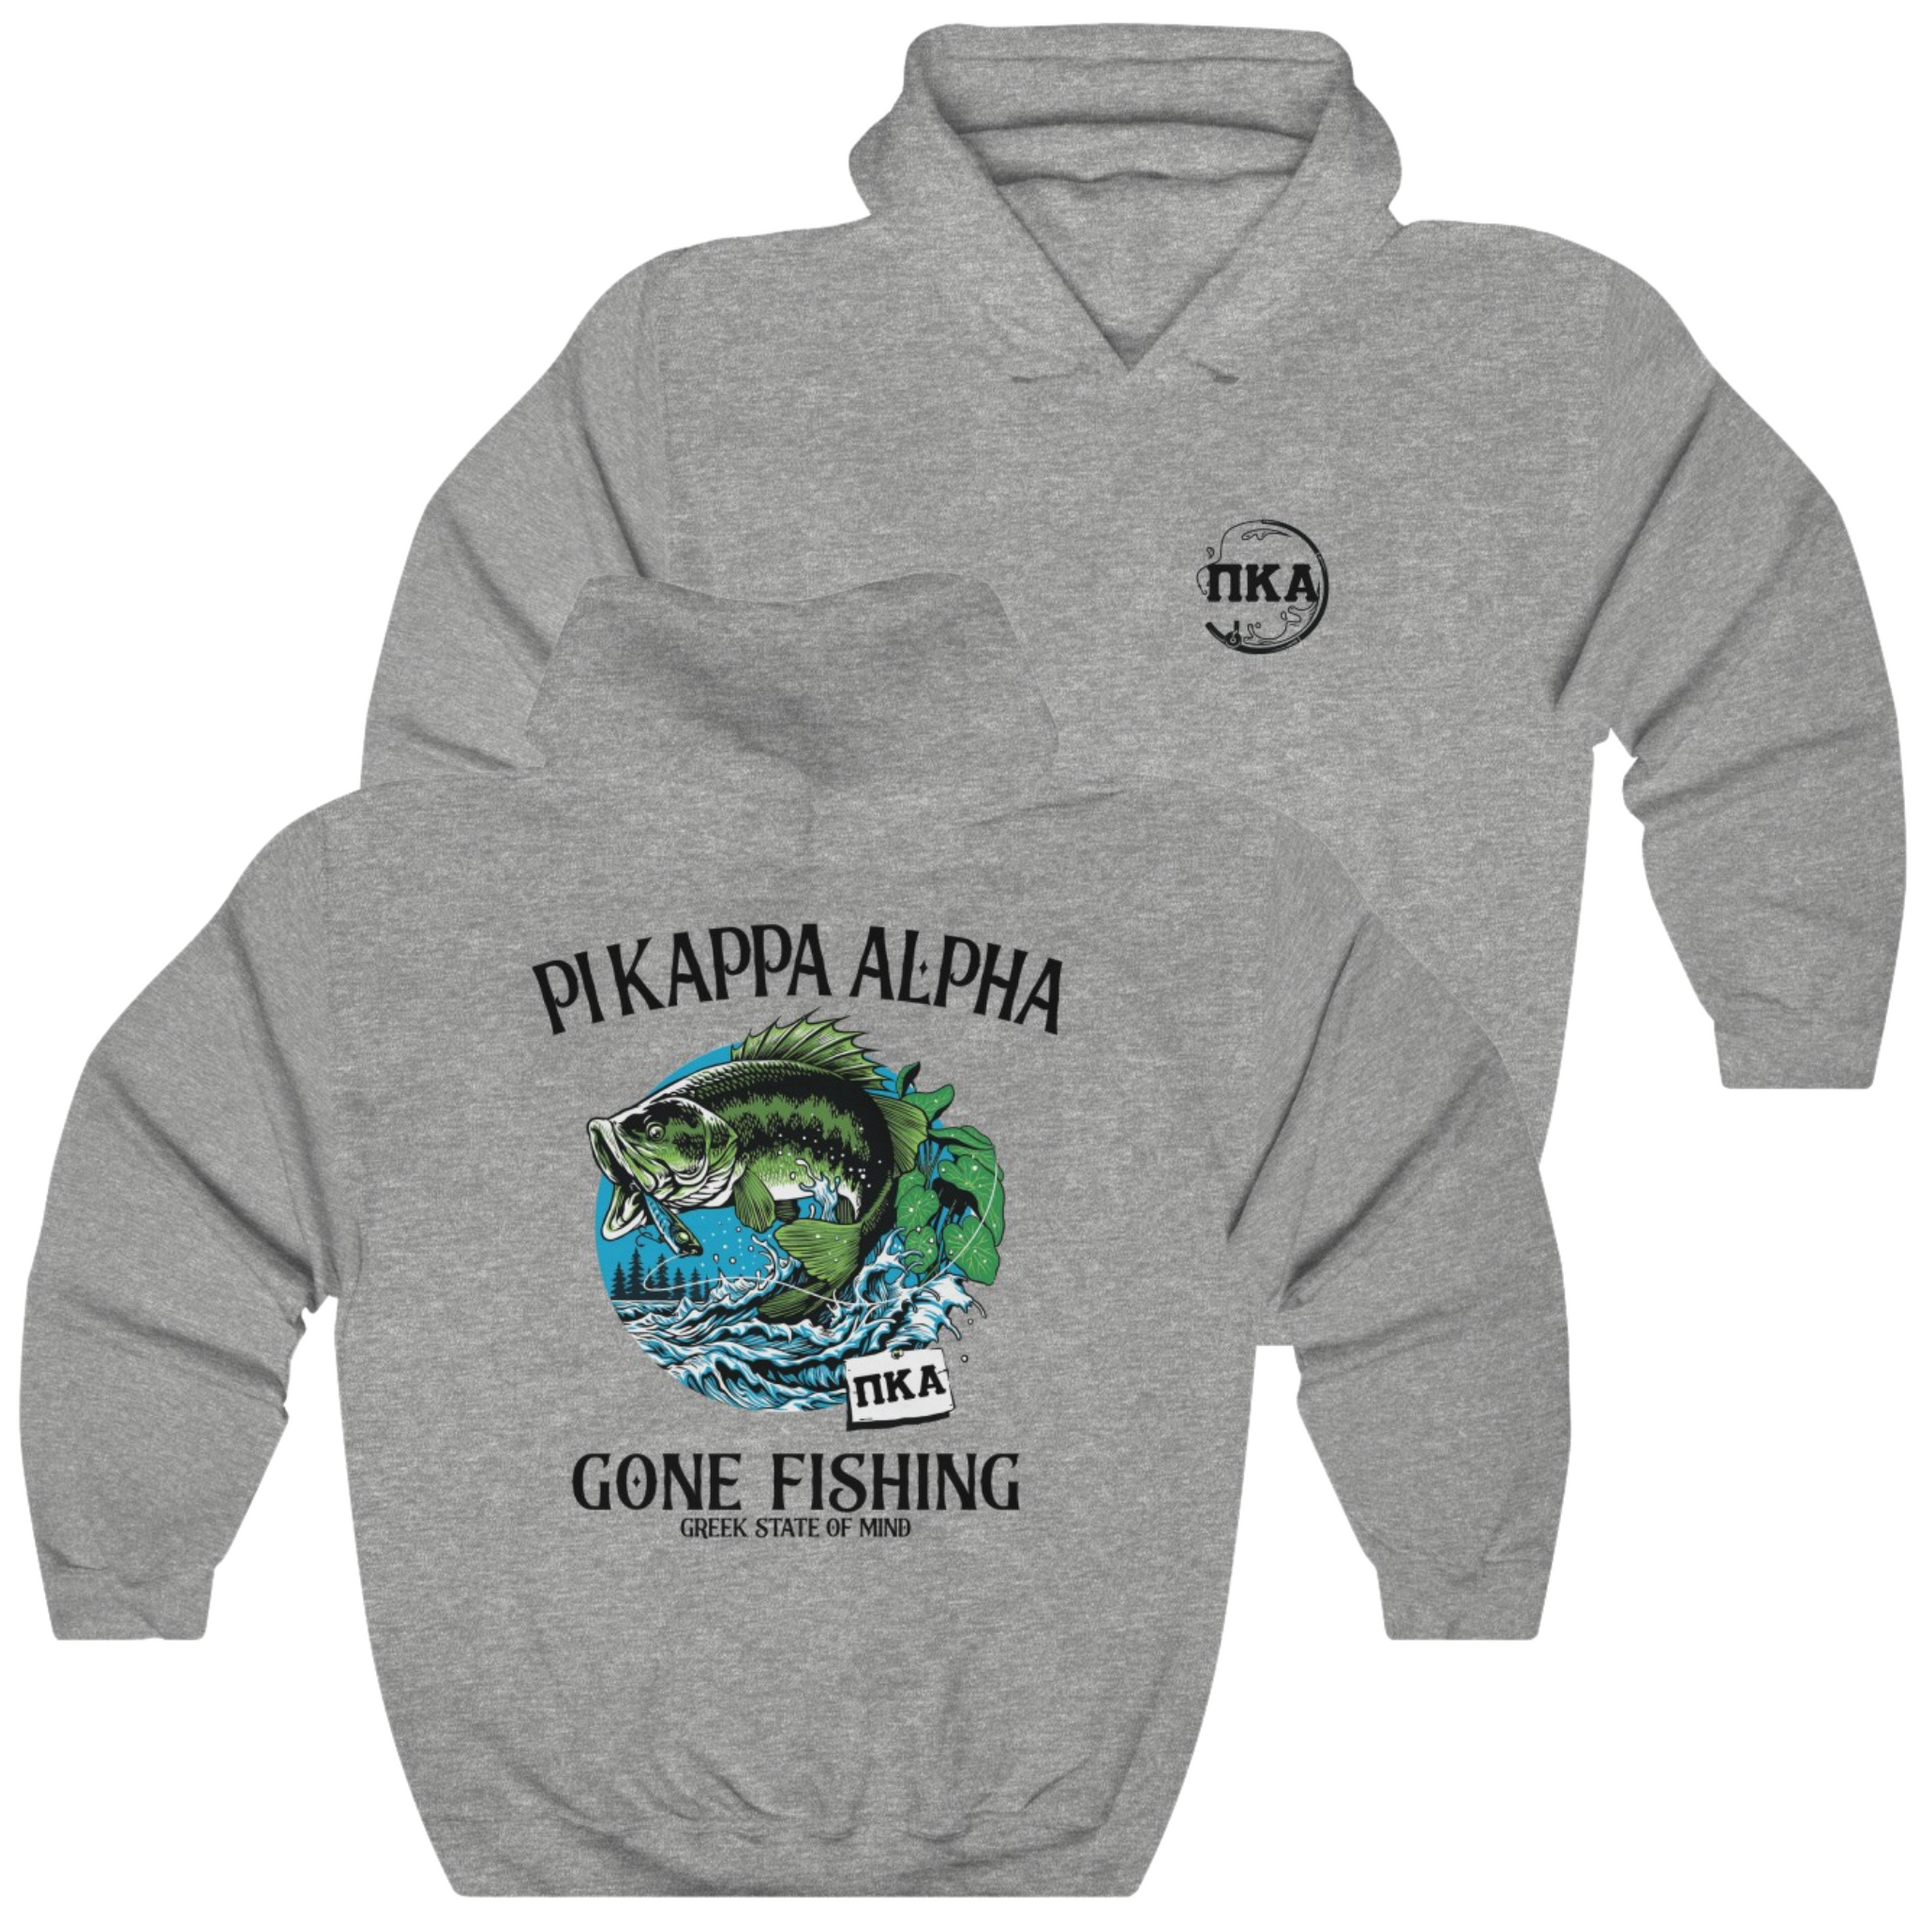 Grey Pi Kappa Alpha Graphic Hoodie | Gone Fishing | Pi kappa alpha fraternity shirt